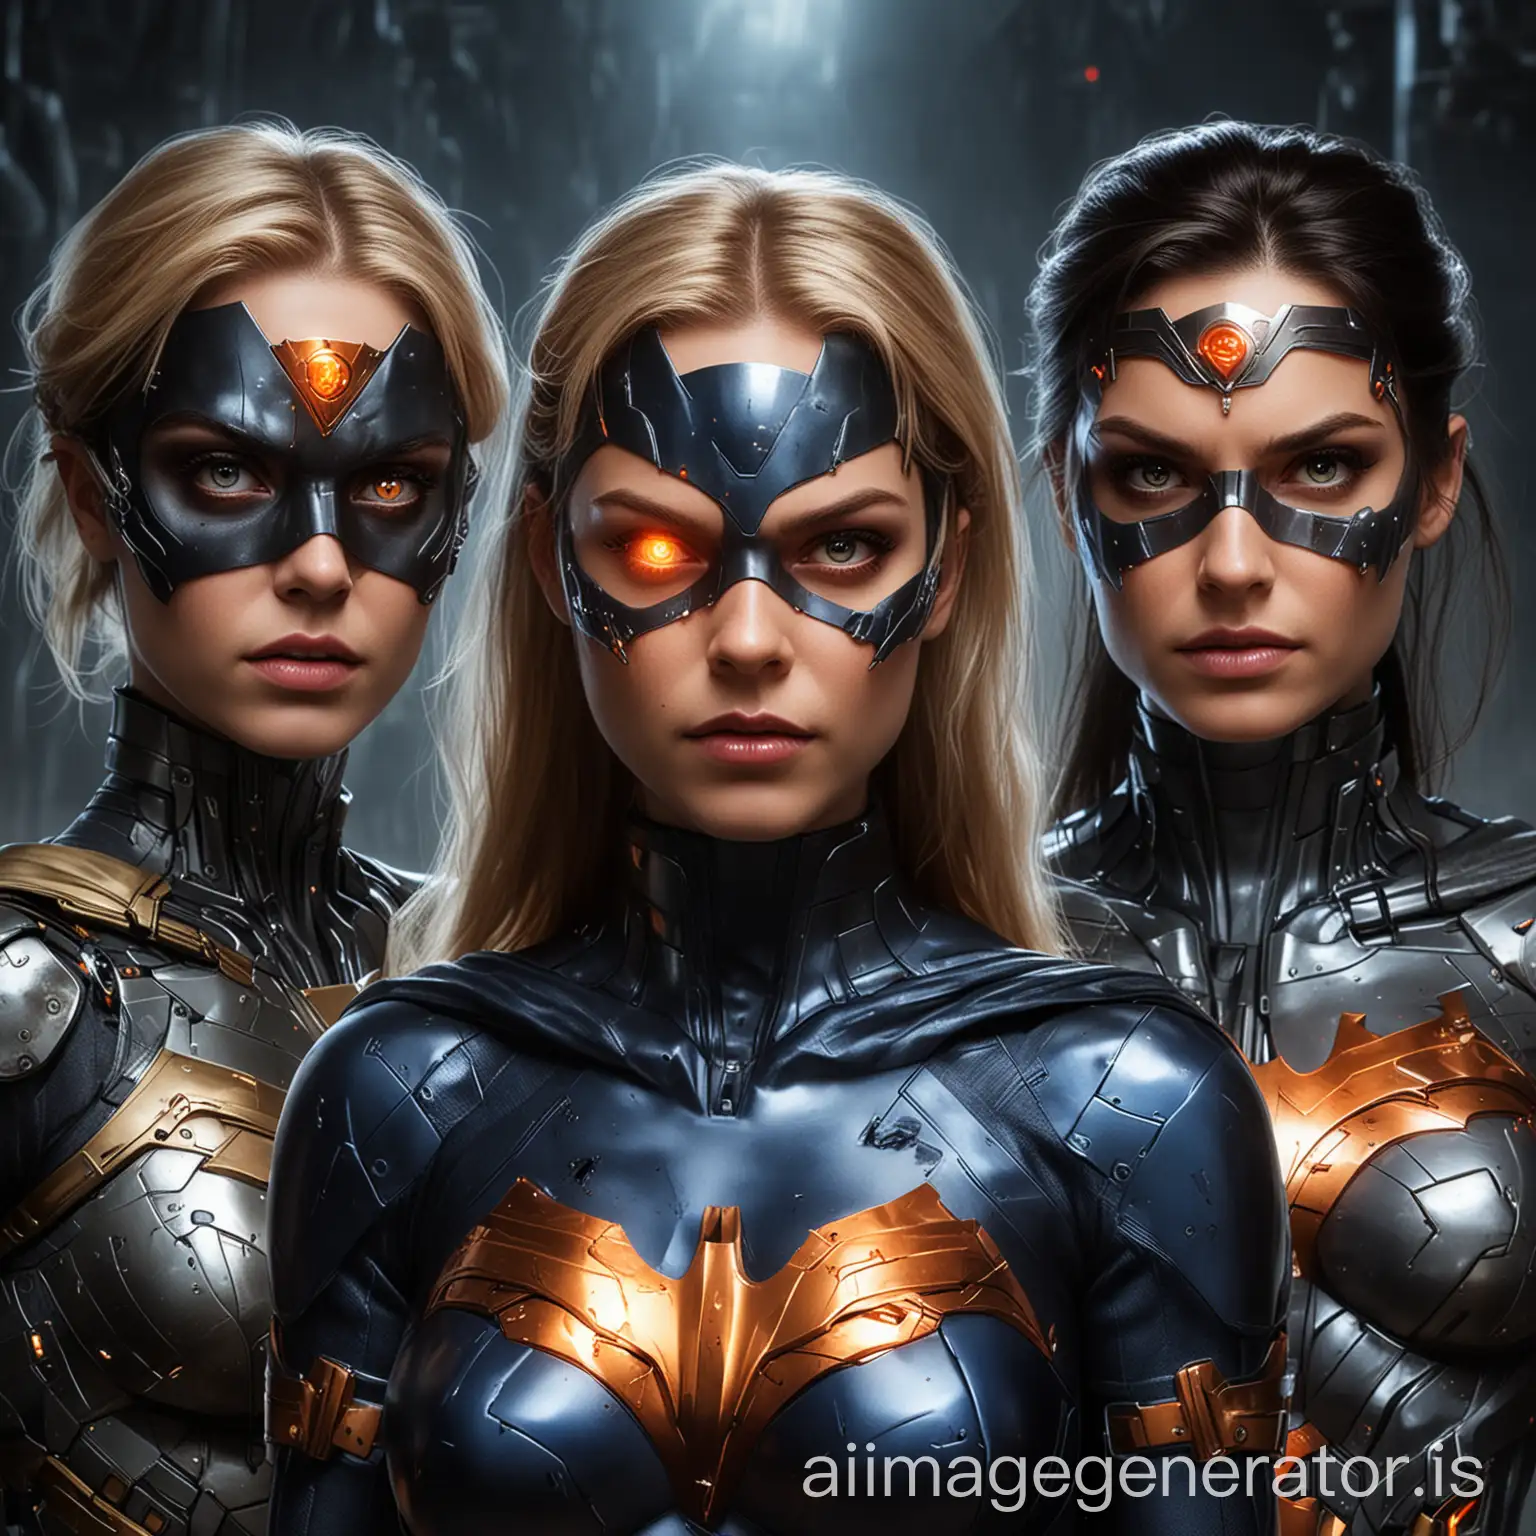 Female-Superheroes-Transformed-into-Evil-Cyborgs-by-MindControl-Machine